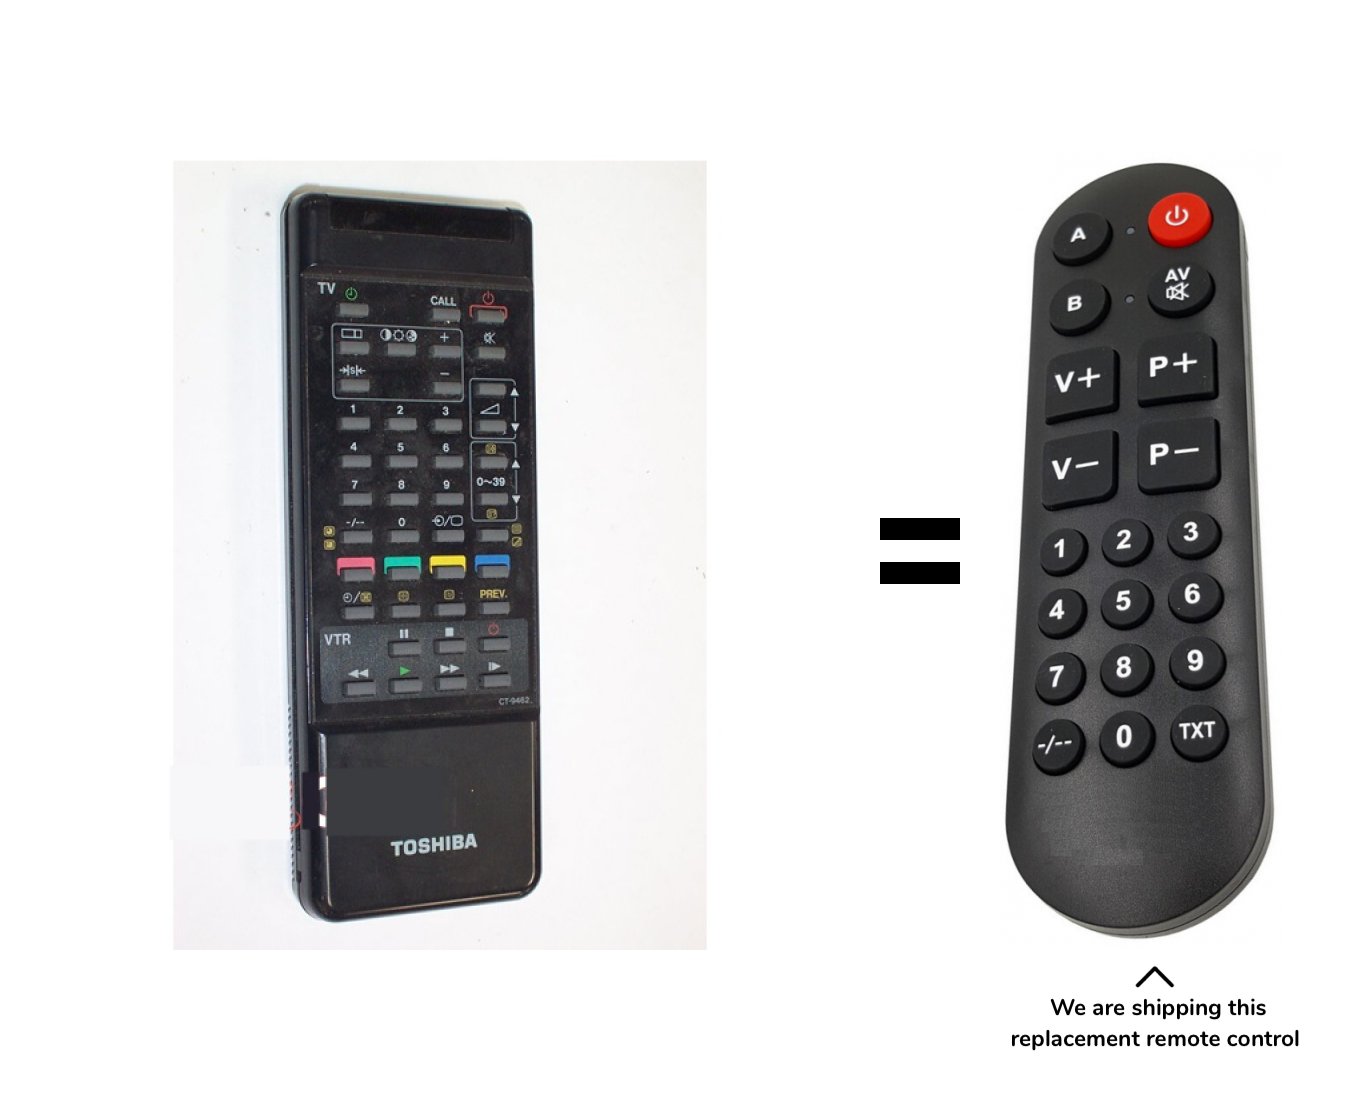 Toshiba CT-9736 remote control for seniors